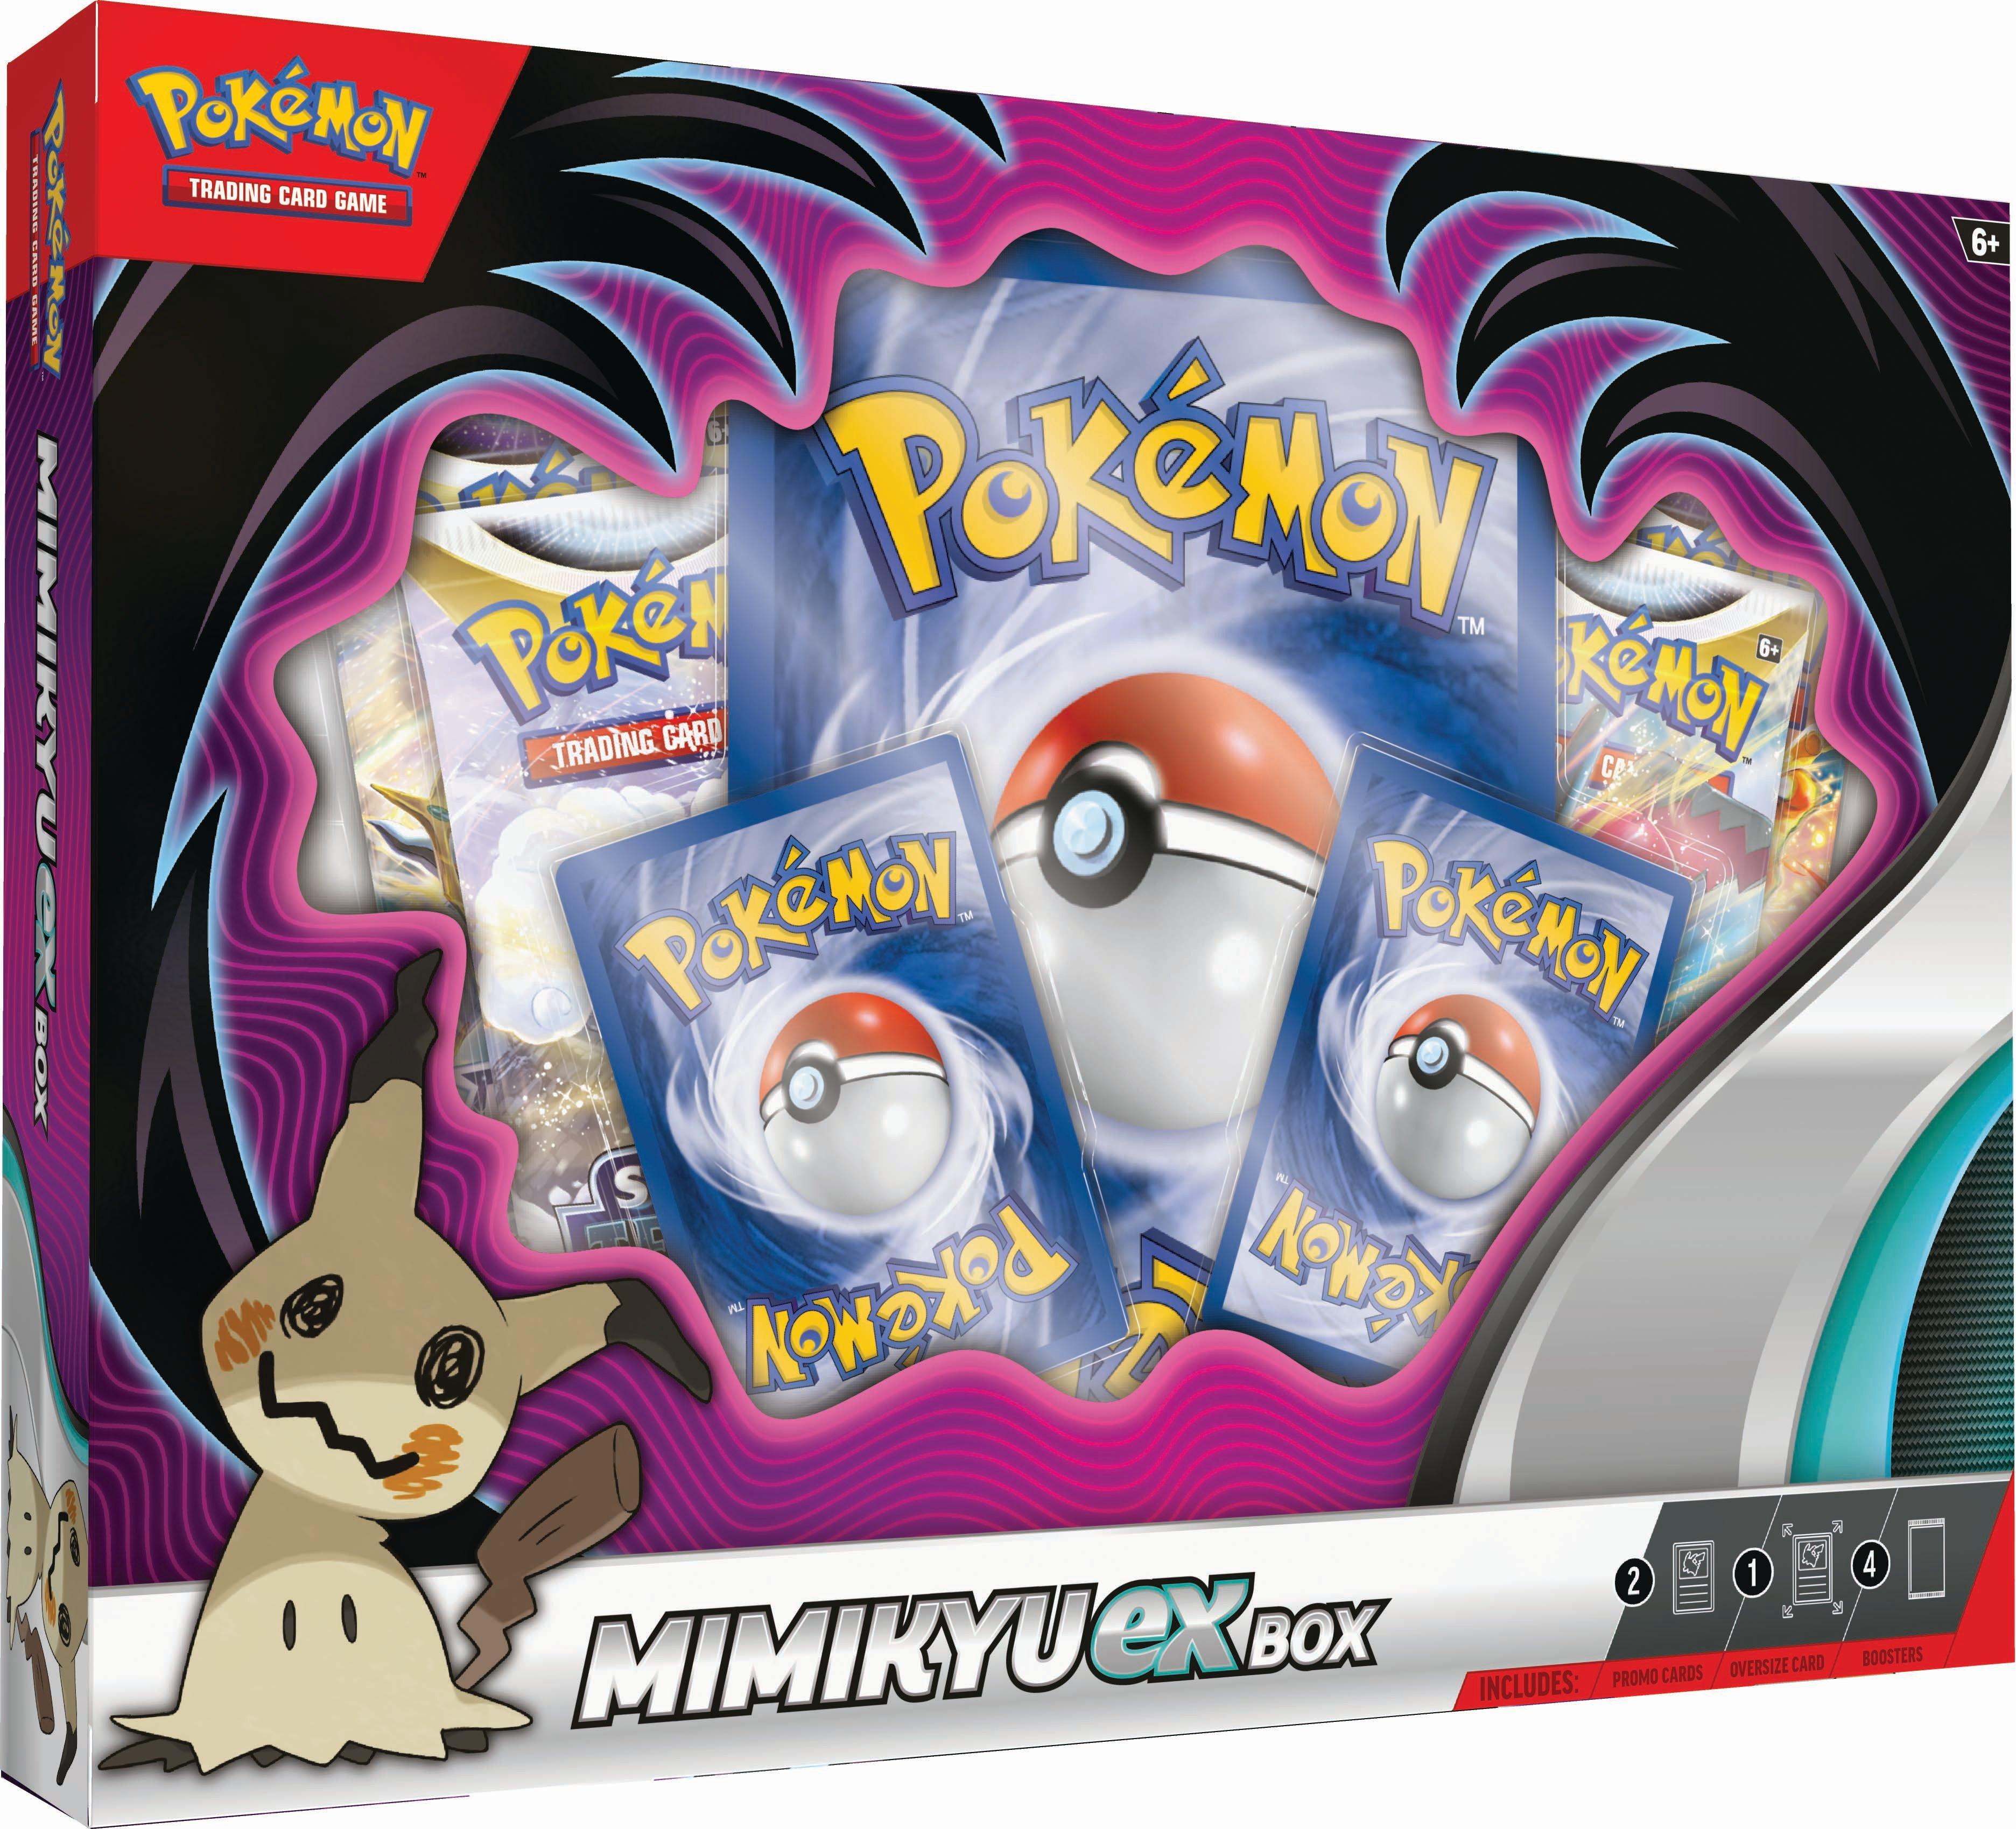 Pokemon Trading Card Game: Mimikyu ex Box | GameStop